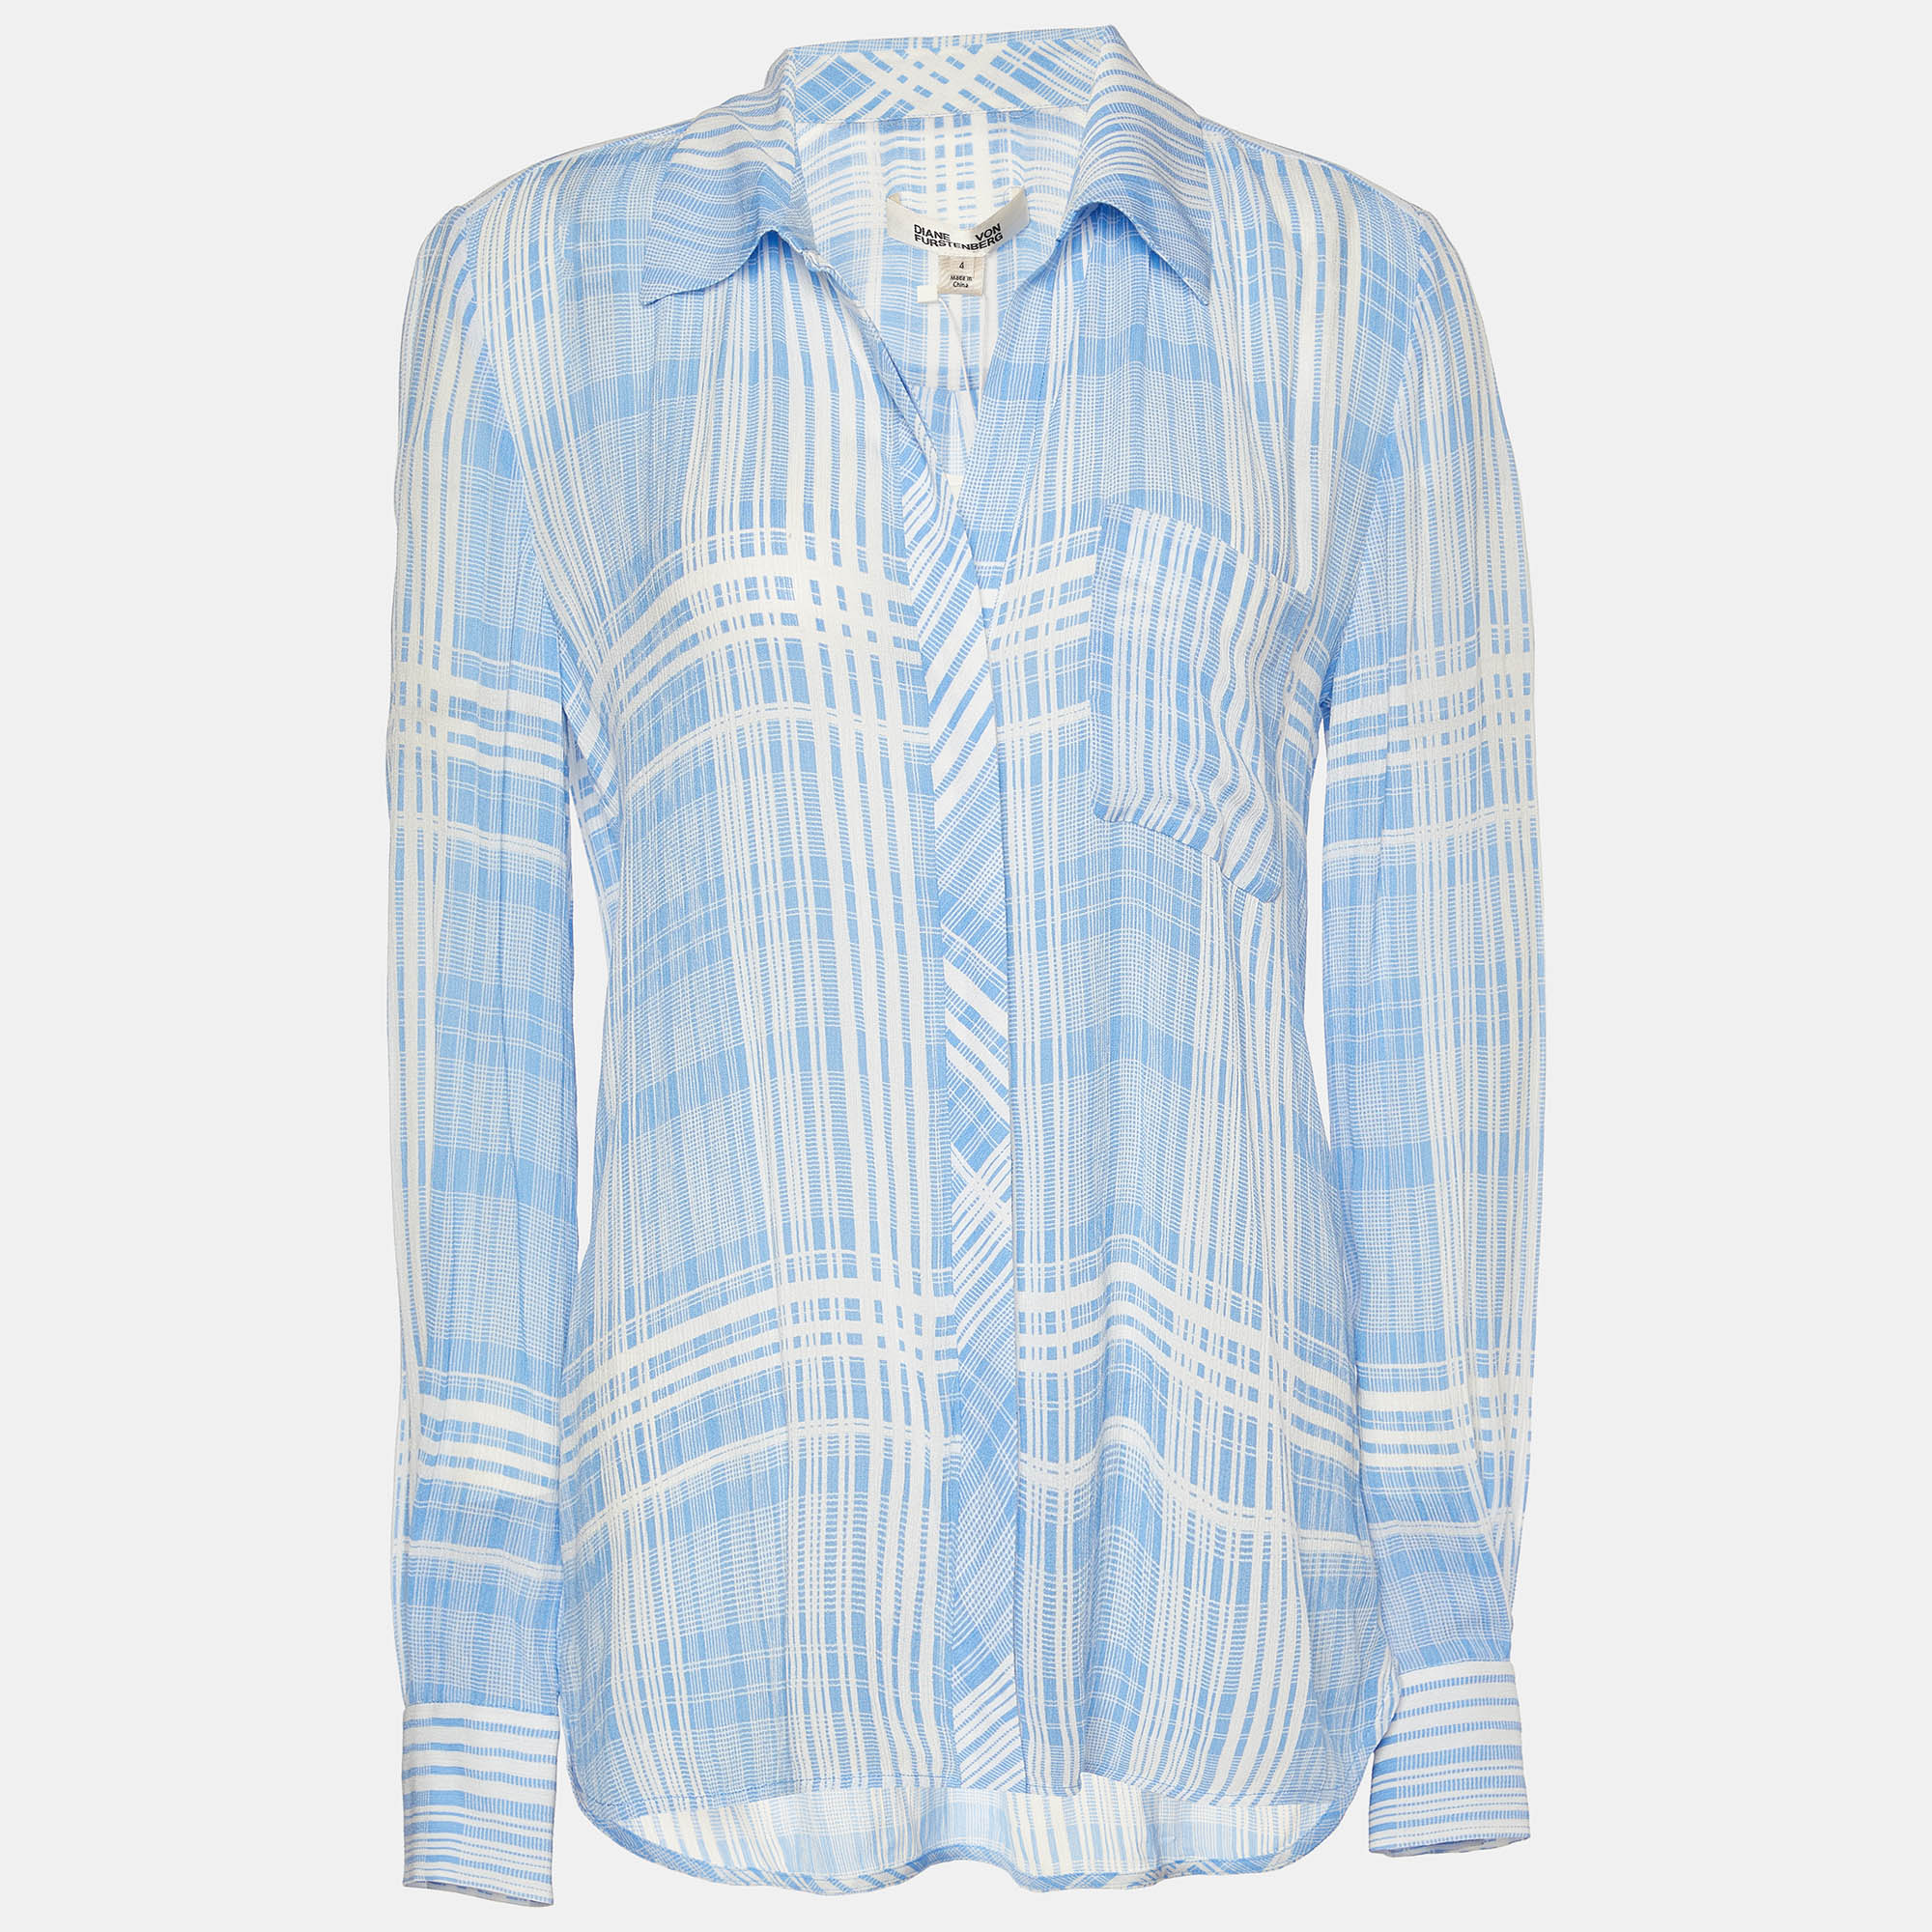 Diane von furstenberg blue & white printed crepe shirt m